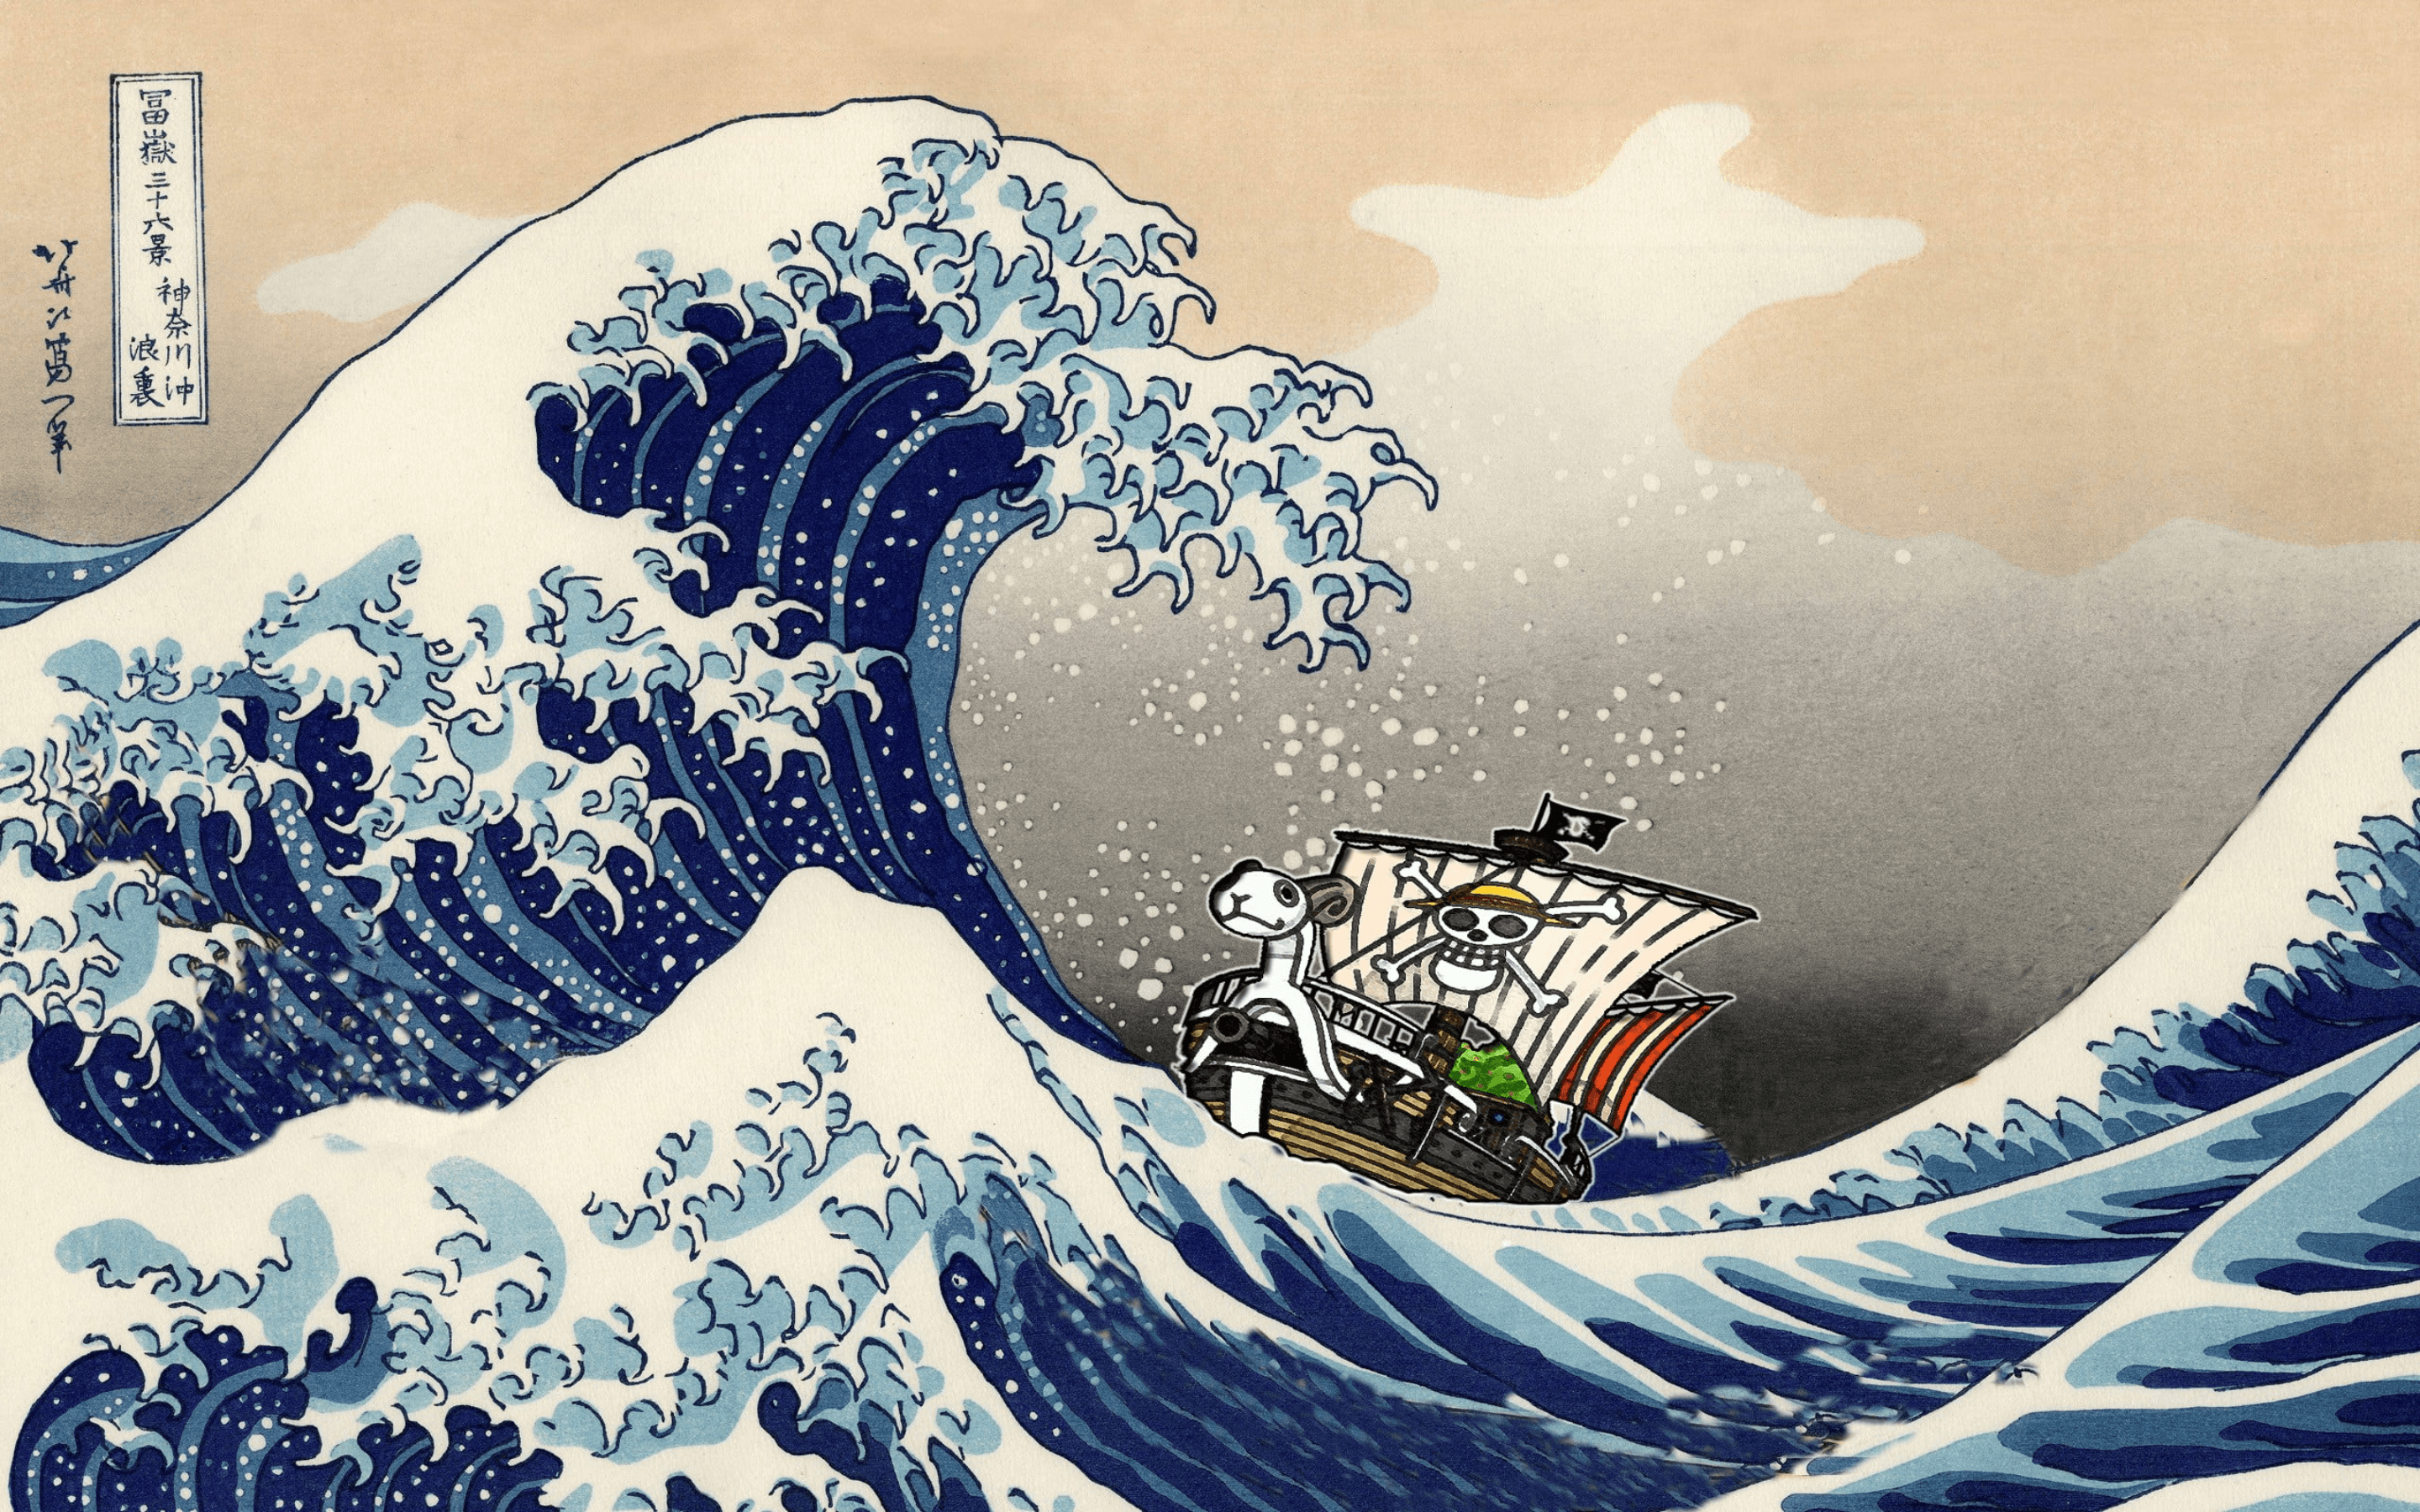 Merry surfs Kanagawa